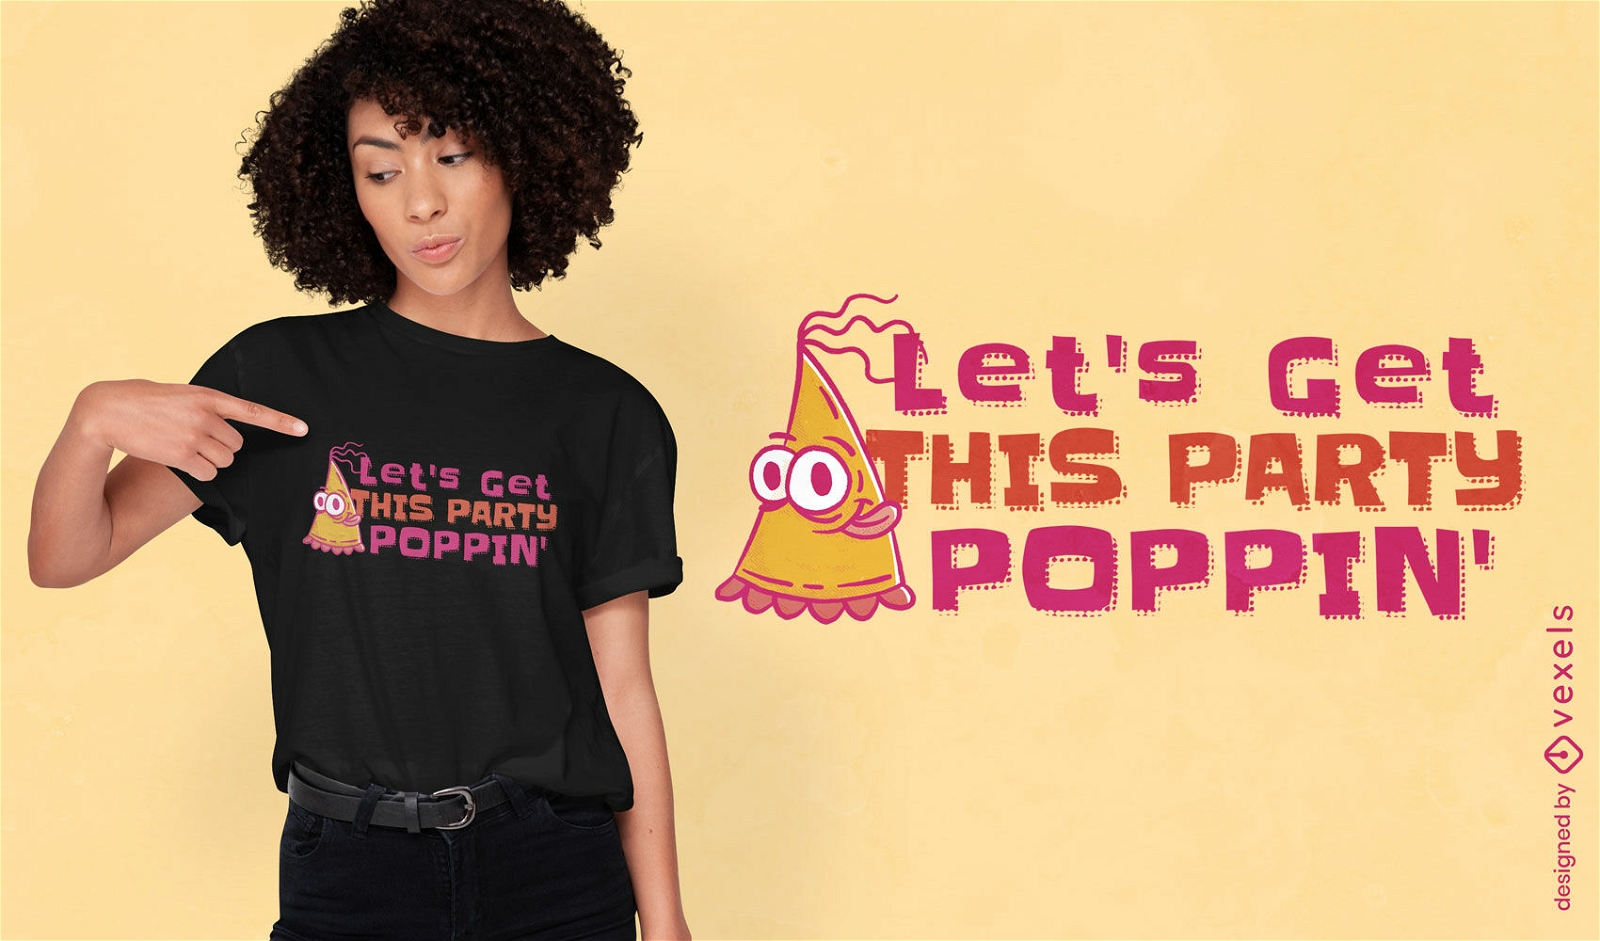 Crazy party t-shirt design